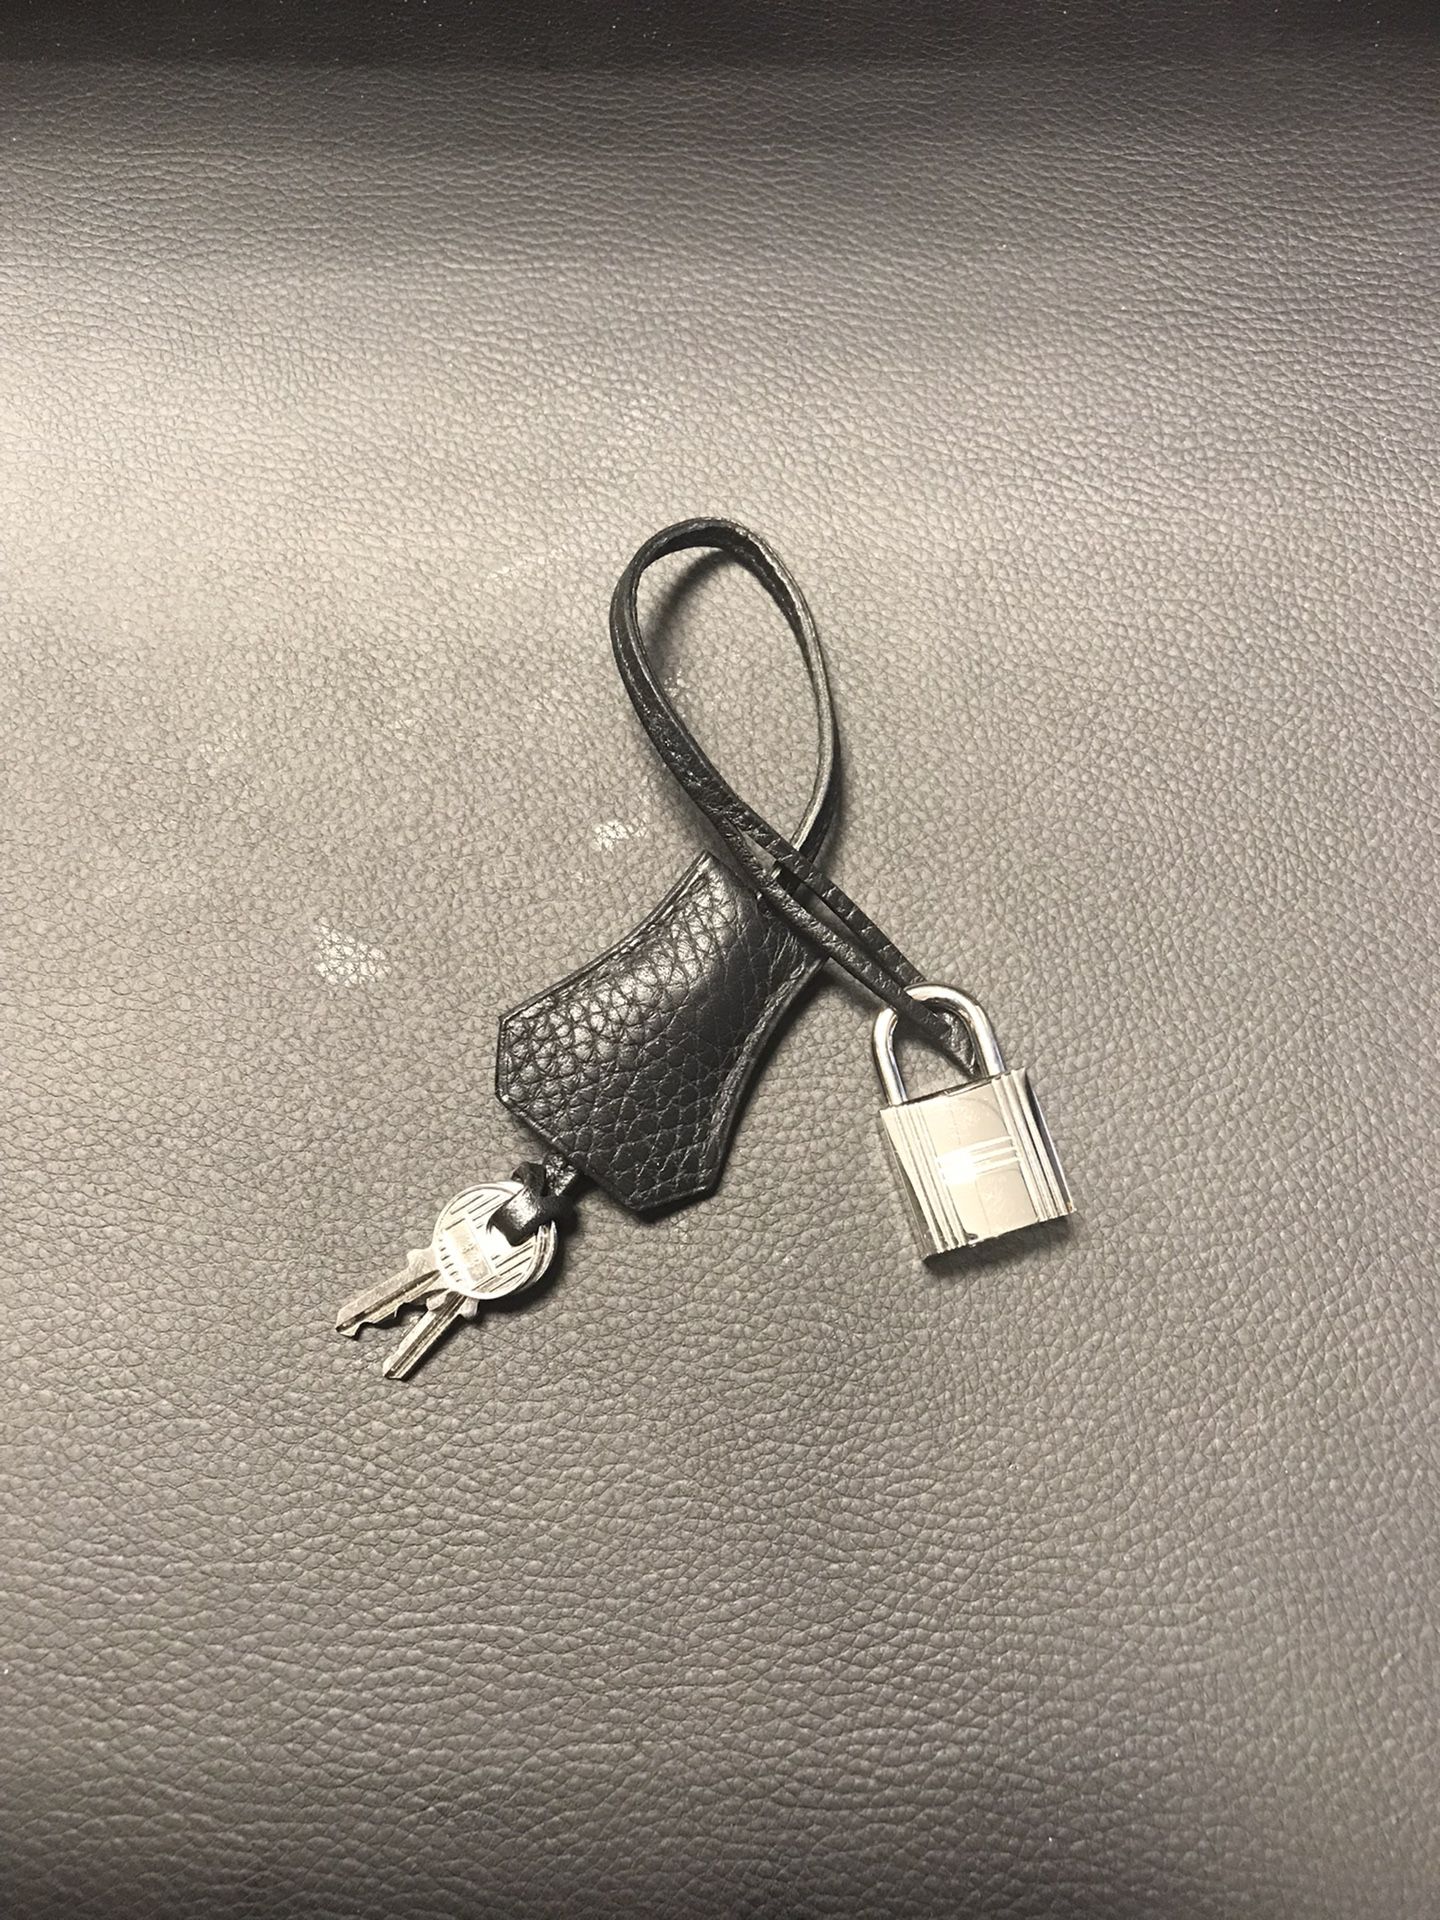 Authentic Hermès lock and key